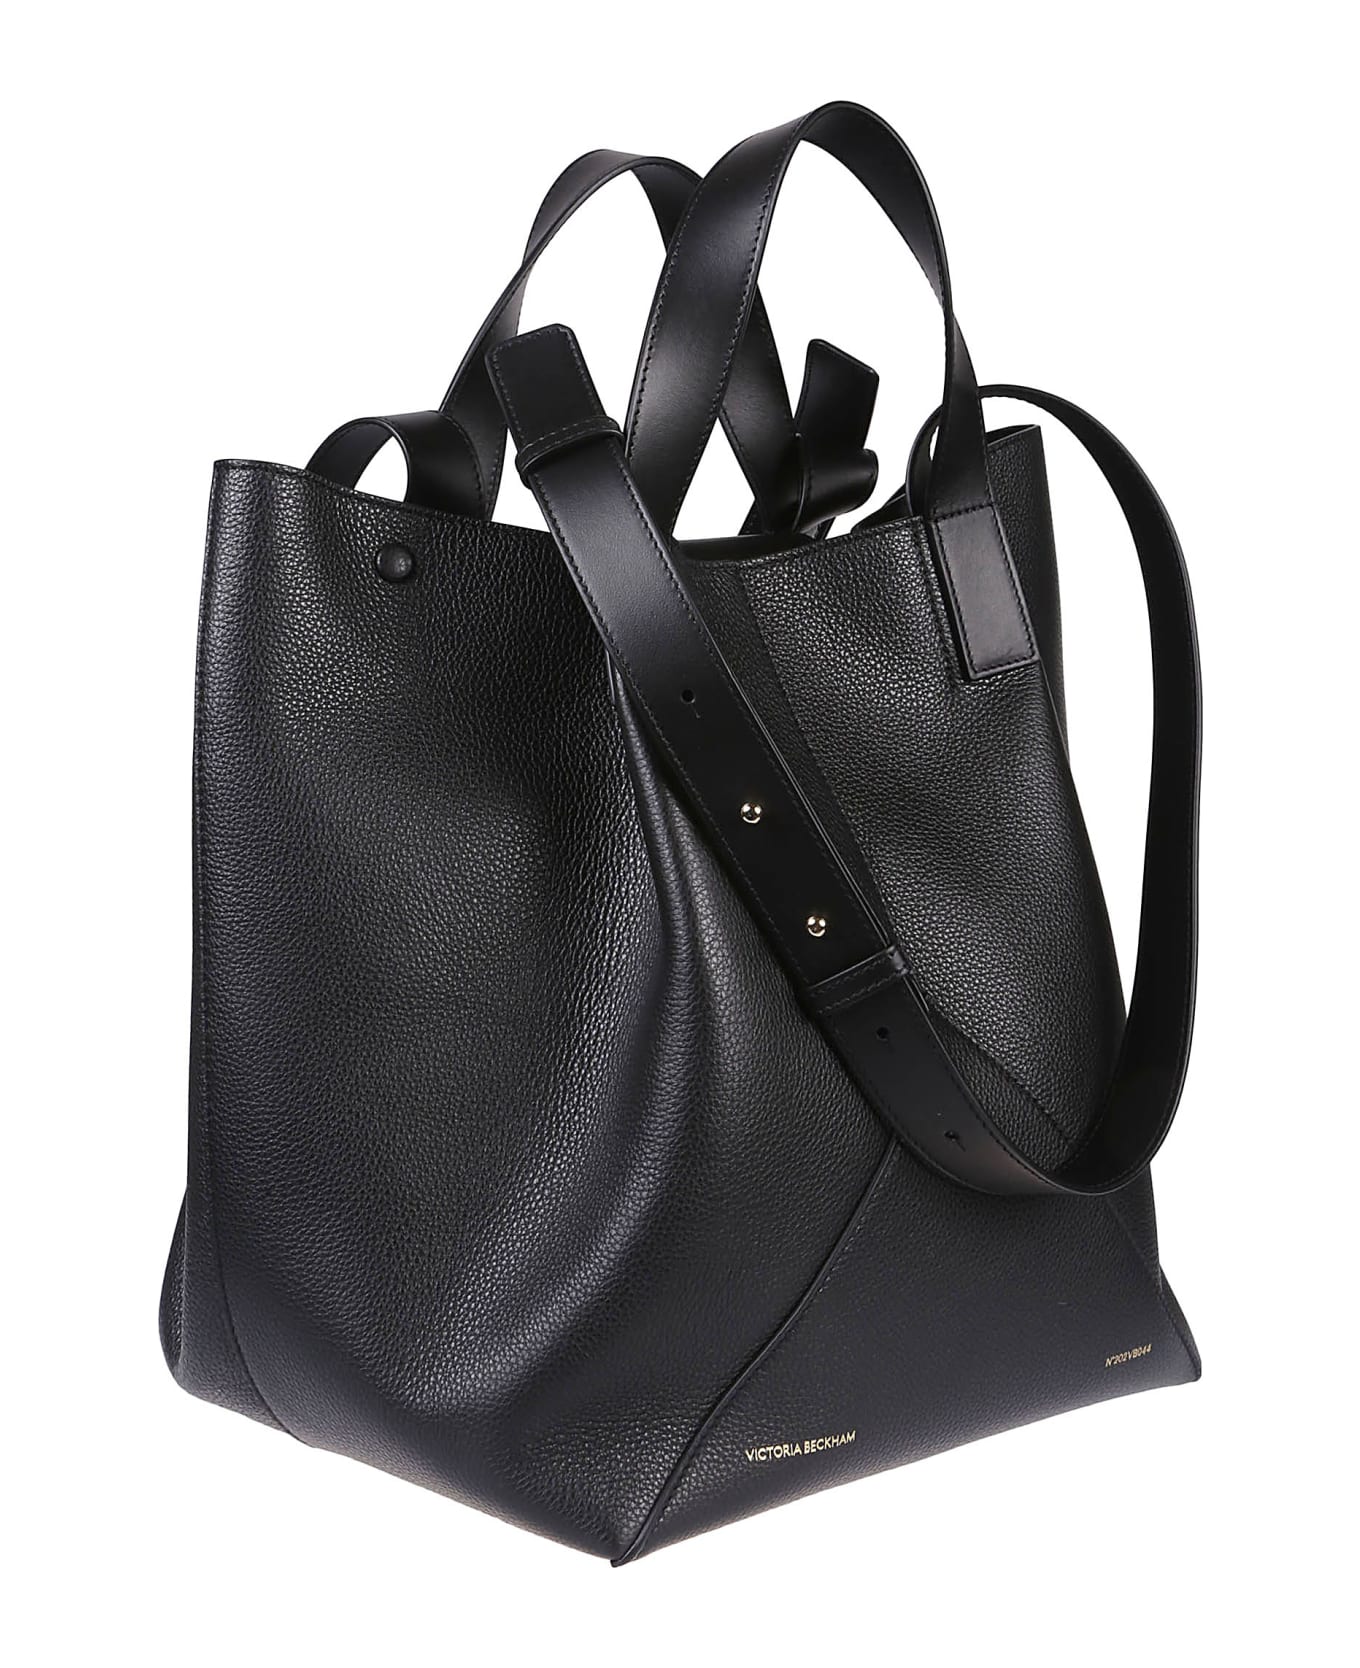 Victoria Beckham Medium Jumbo Shopping Bag - Black